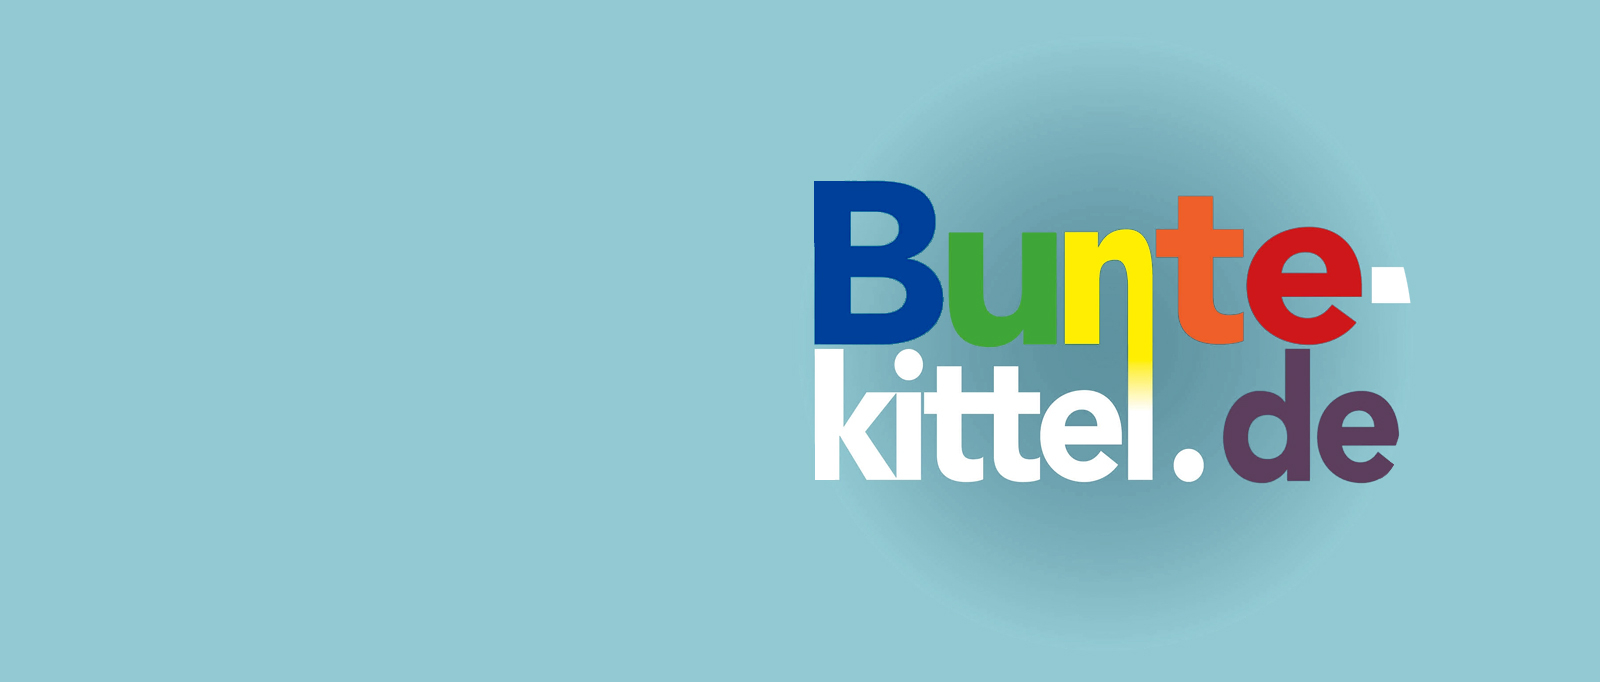 Kampagne "Bunte Kittel"